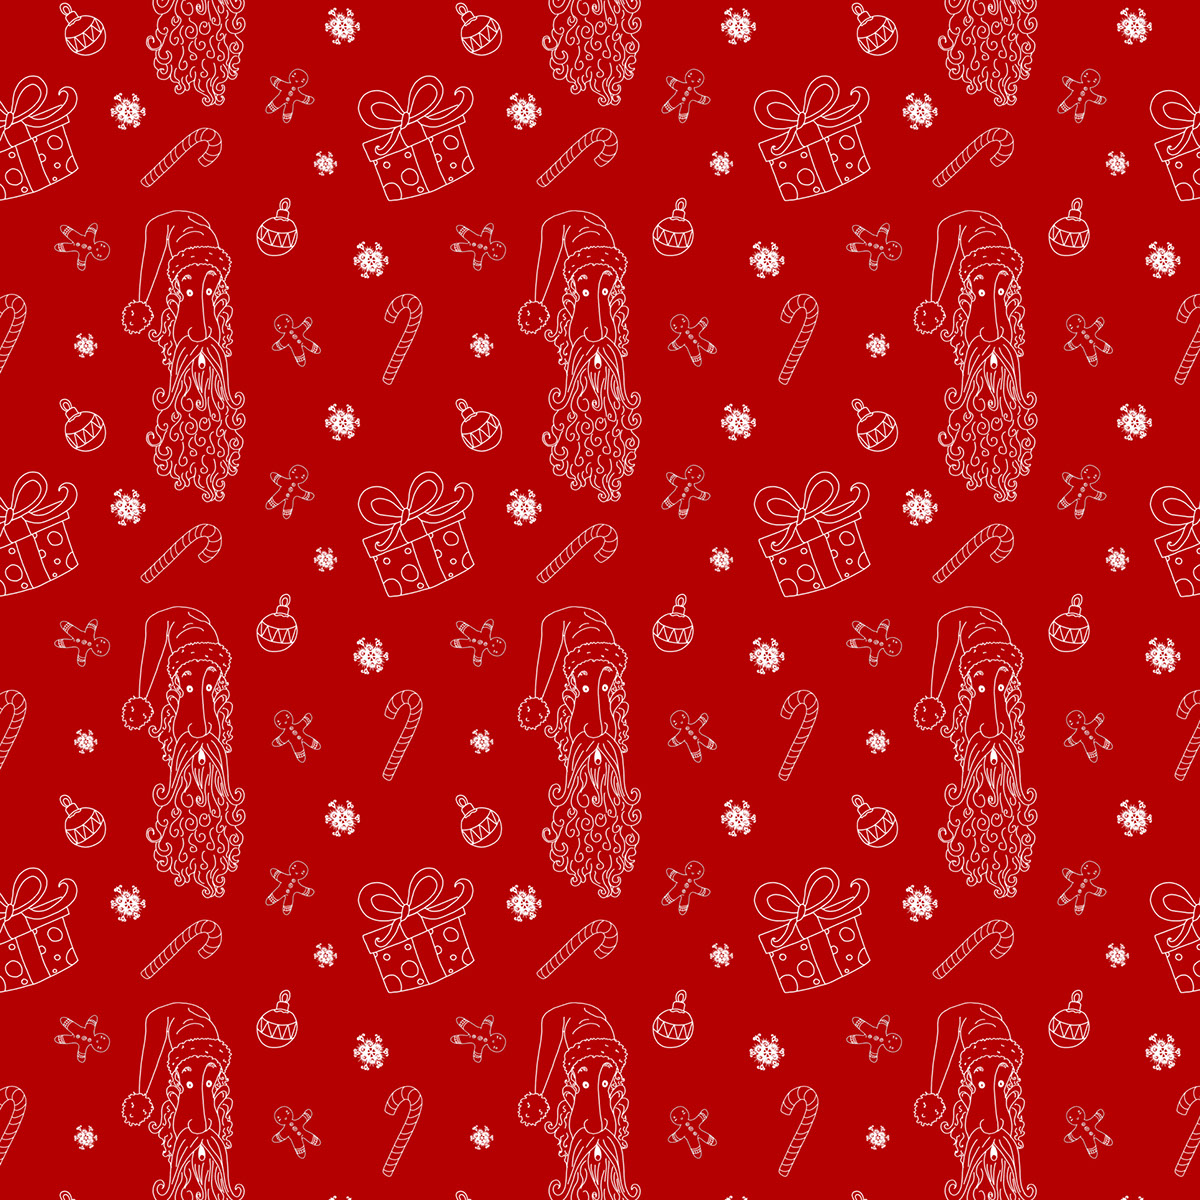 Santa Claus elf pattern